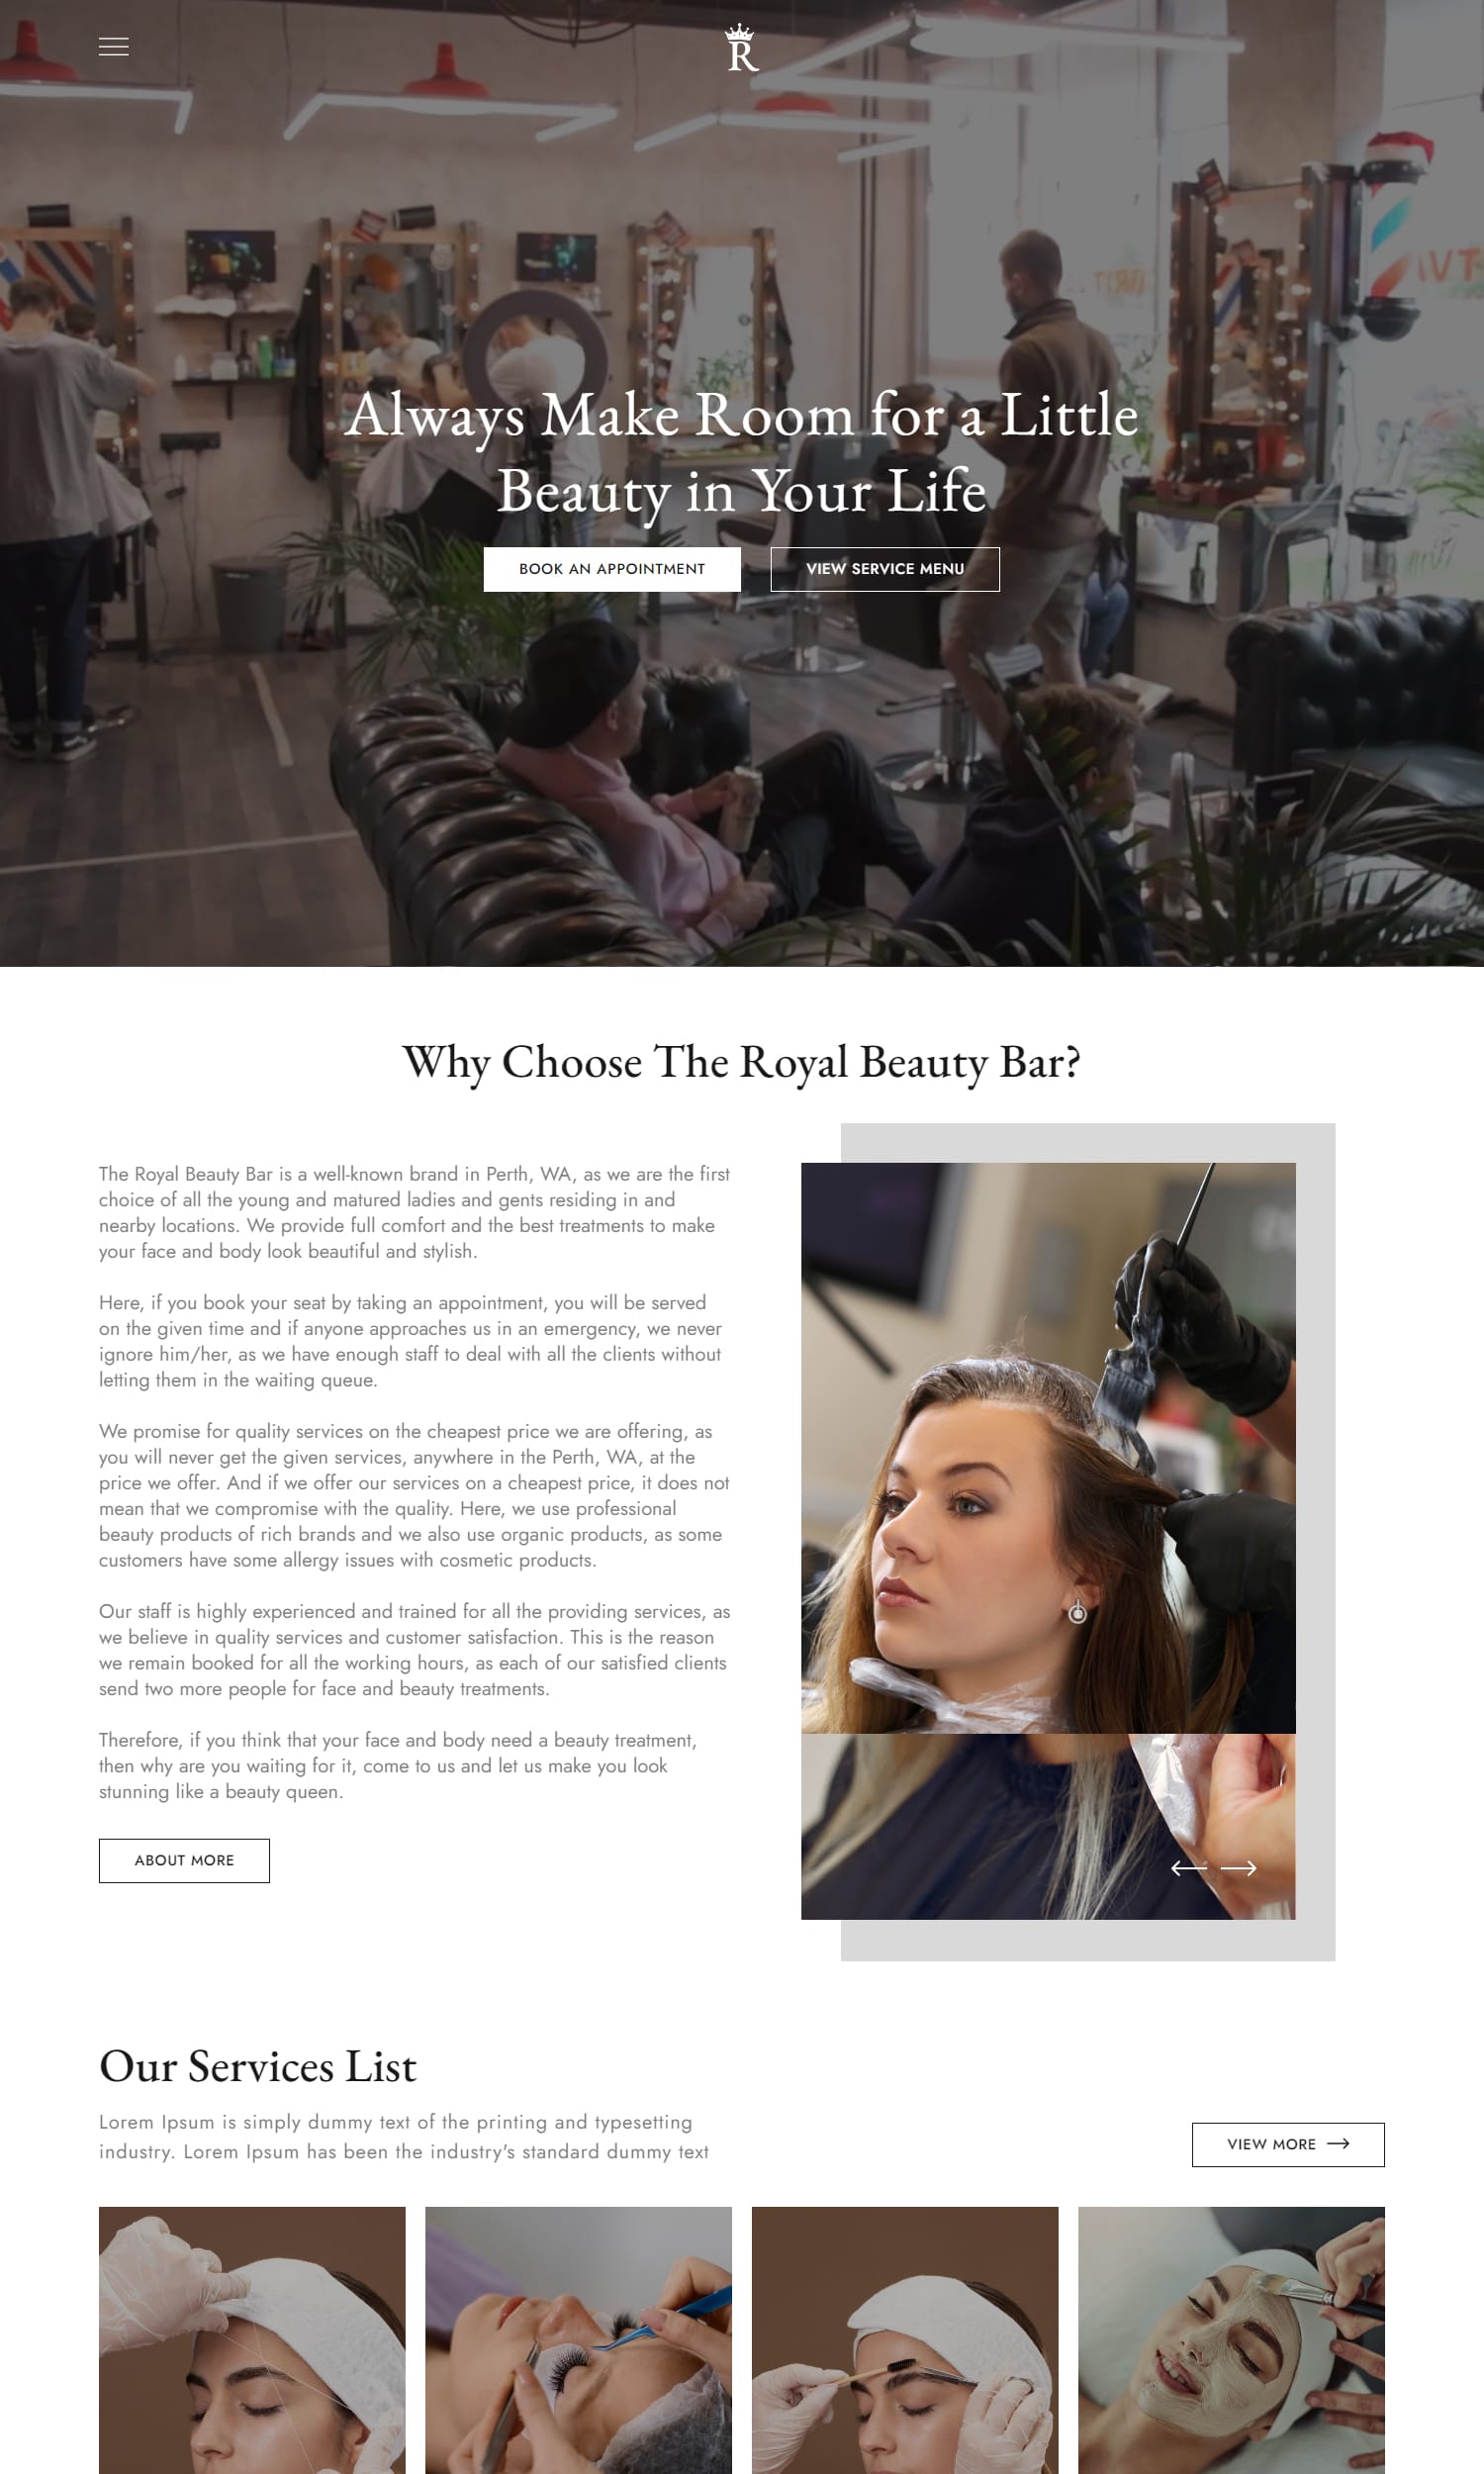 The Royal Beauty Bar